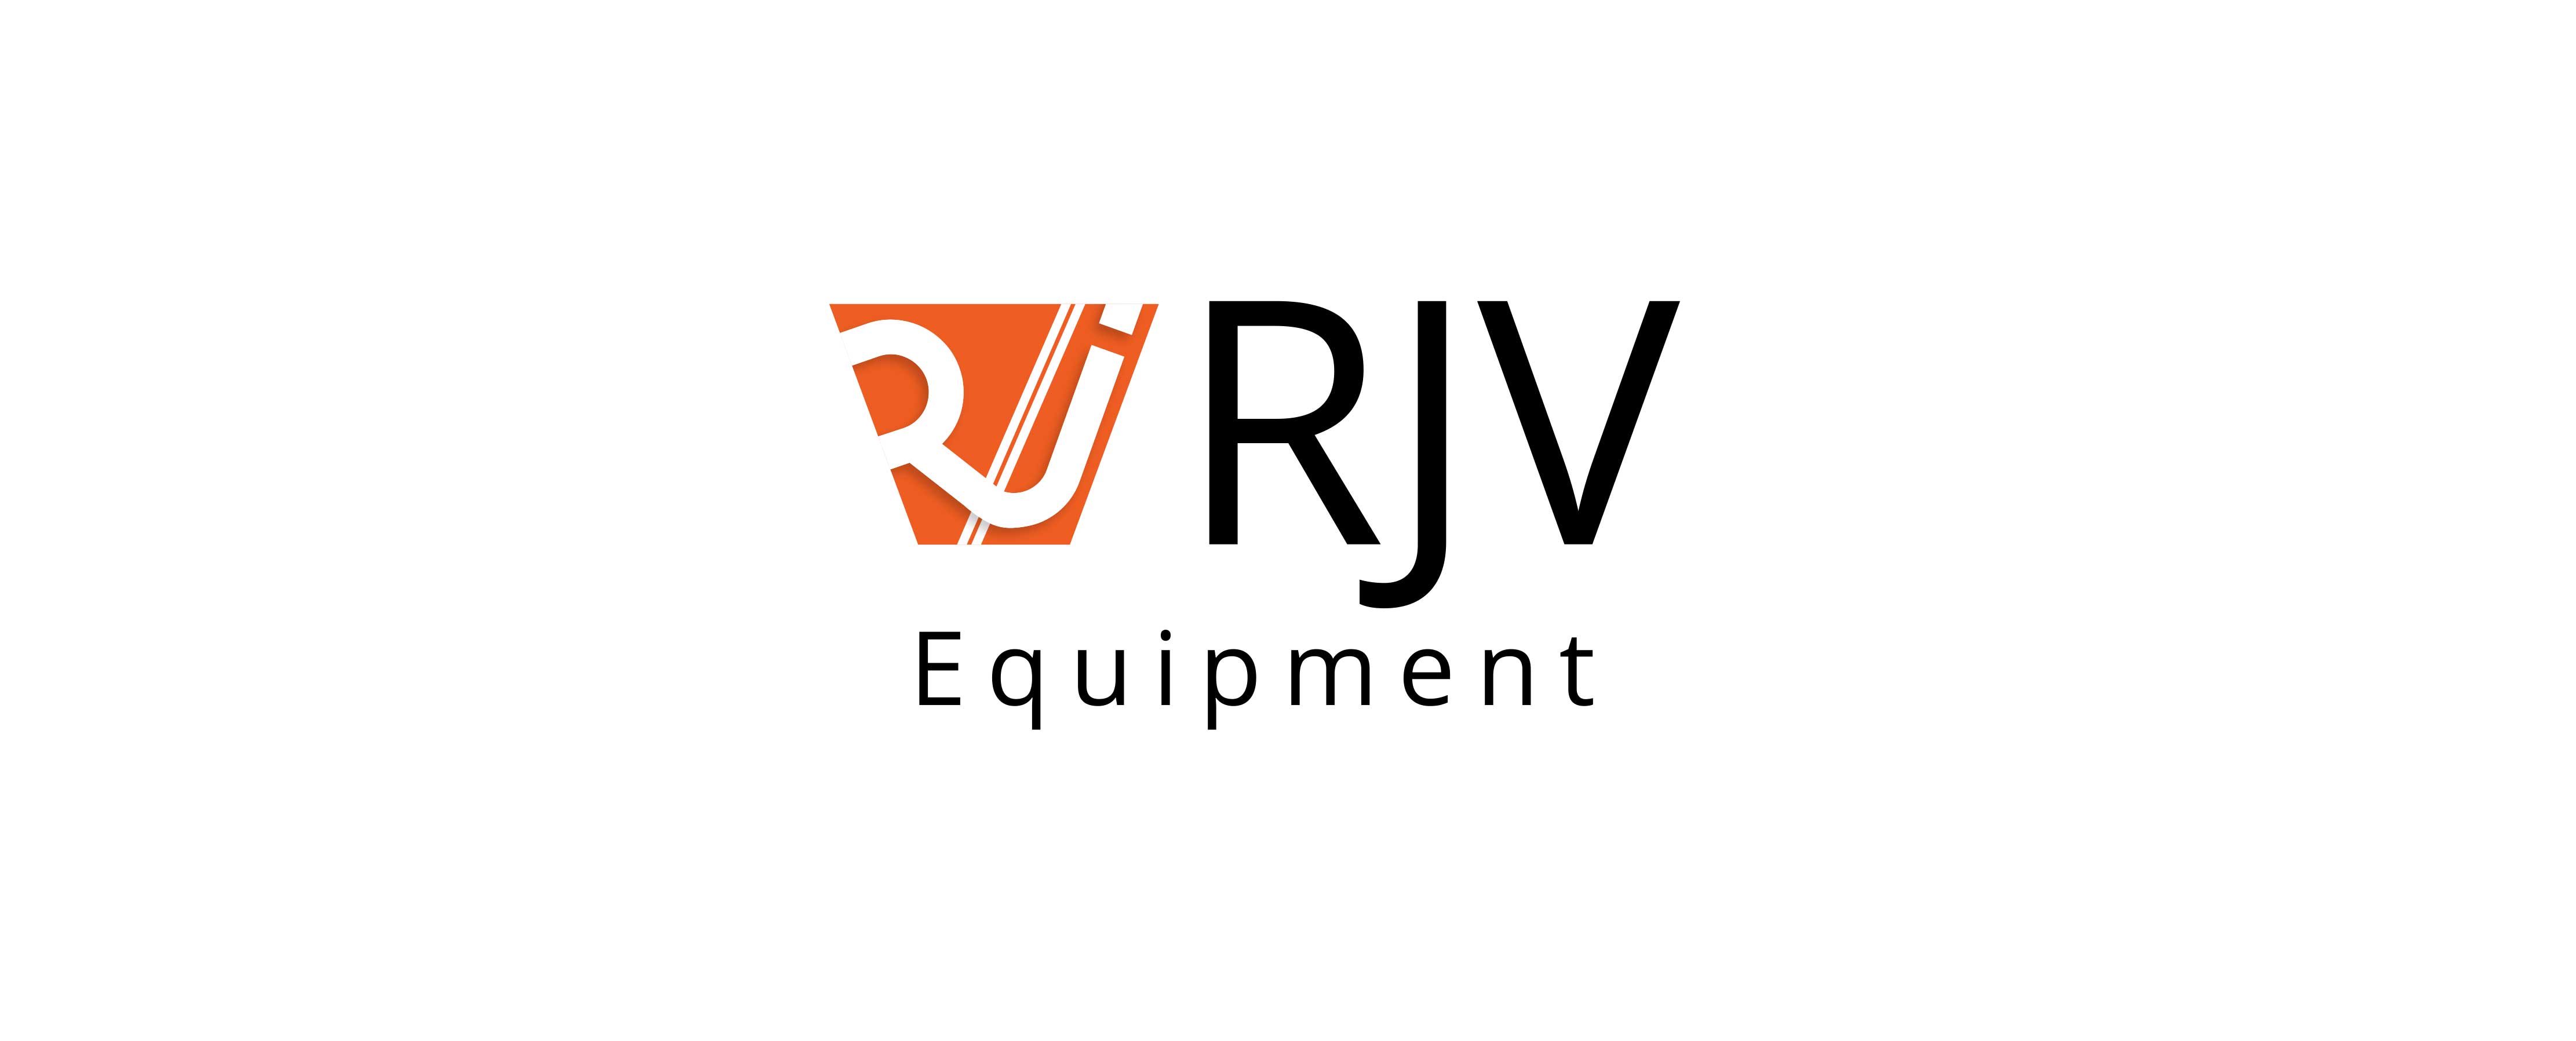 RJV Logo